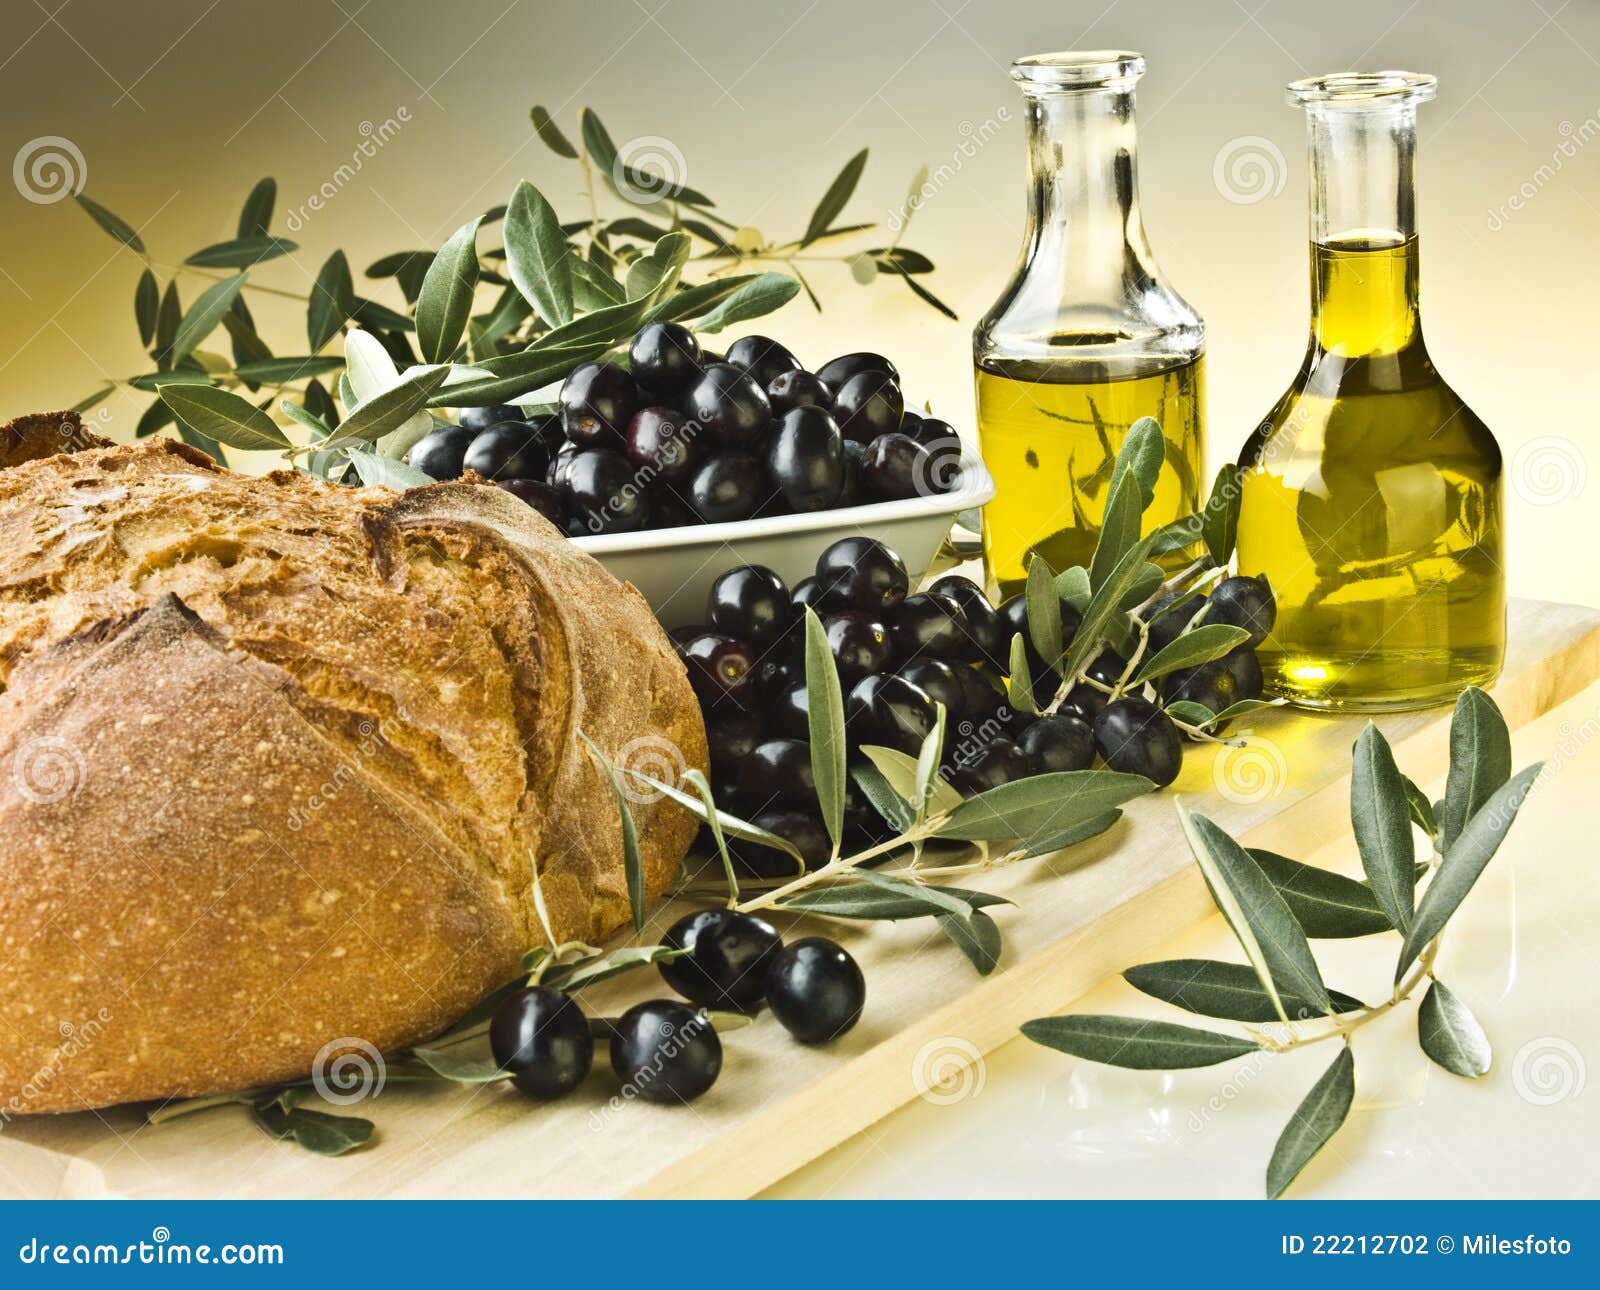 Bread olive oil. Оливковое дерево маслом. Оливковое масло и маслины. Хлеб с оливковым маслом. Оливковое масло Франция.